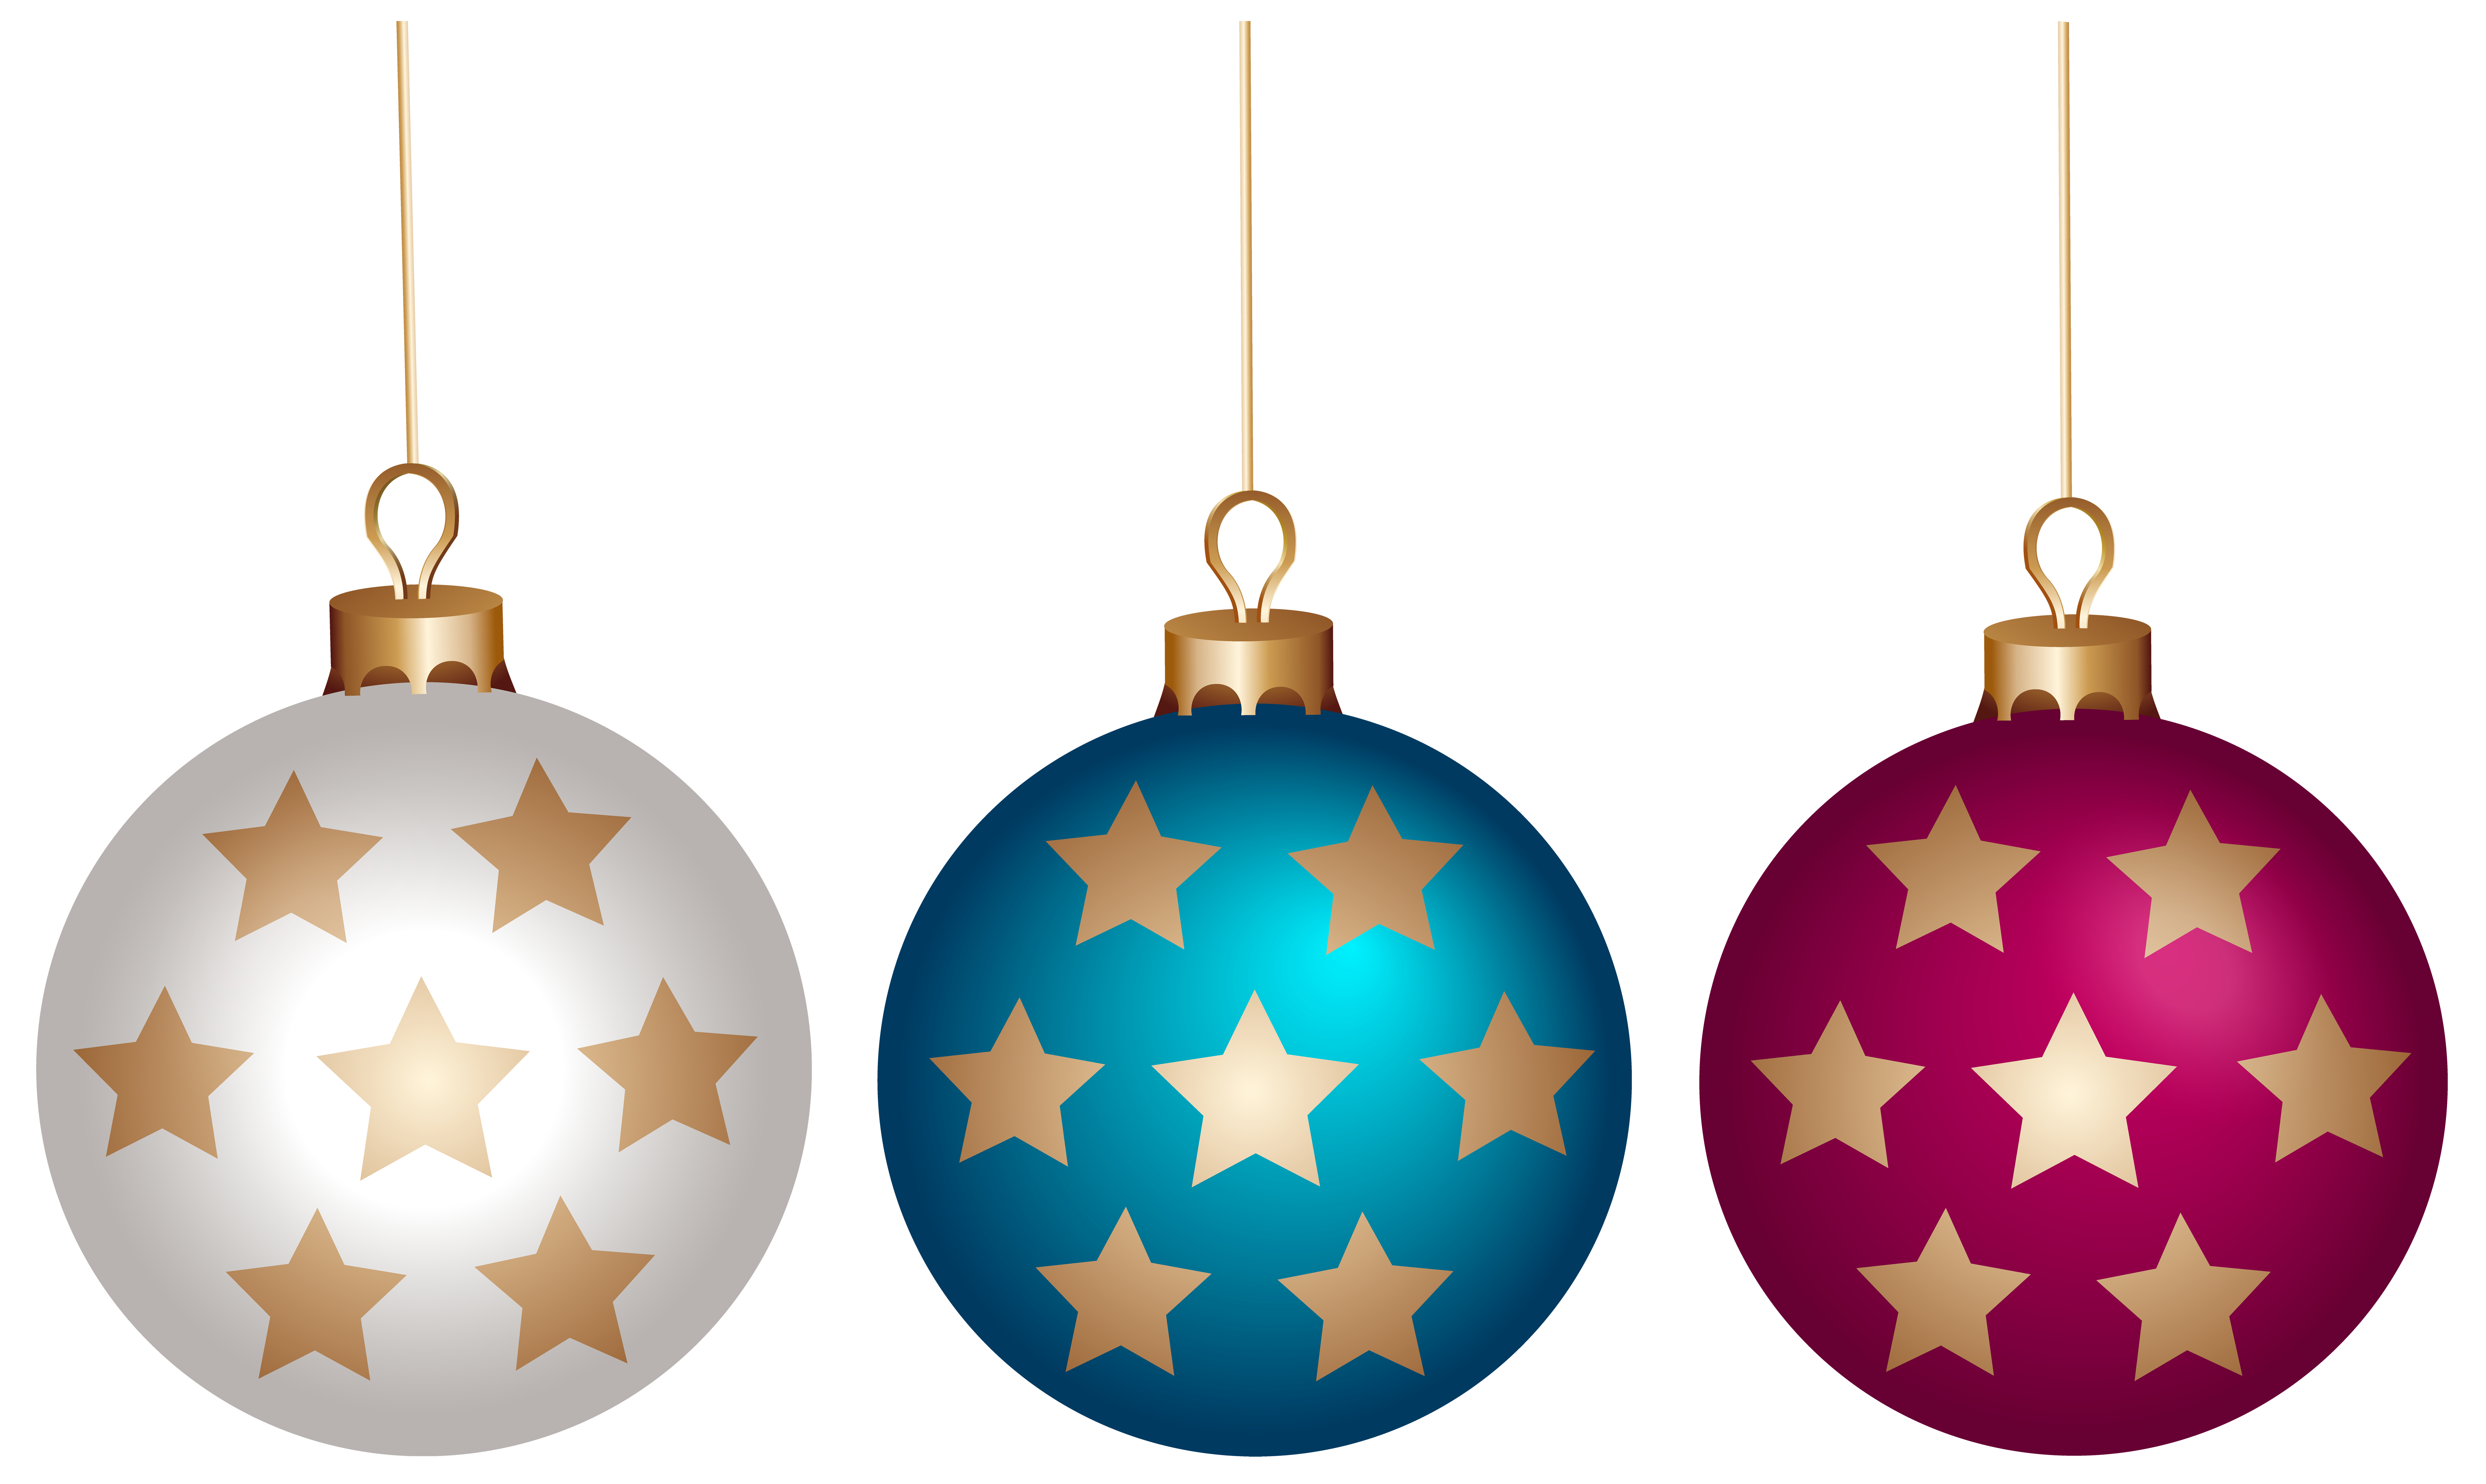 ornaments clipart snowflake